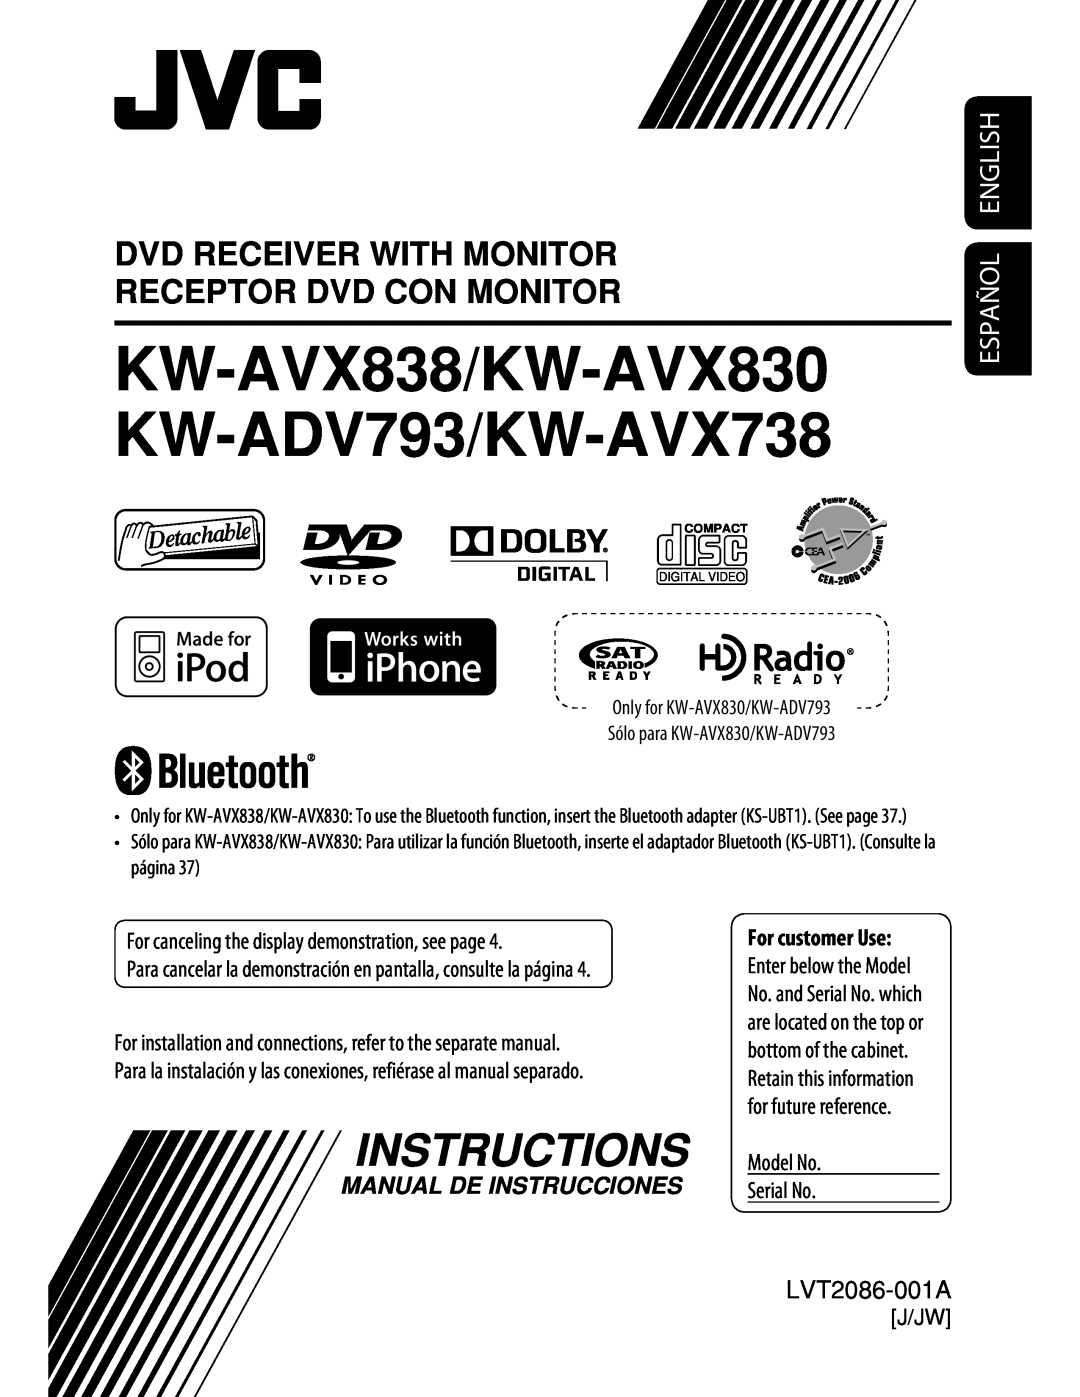 JVC KW-AVX830 manual Dvd Receiver With Monitor Receptor Dvd Con Monitor, Español English, Instructions, LVT2086-001A, J/Jw 